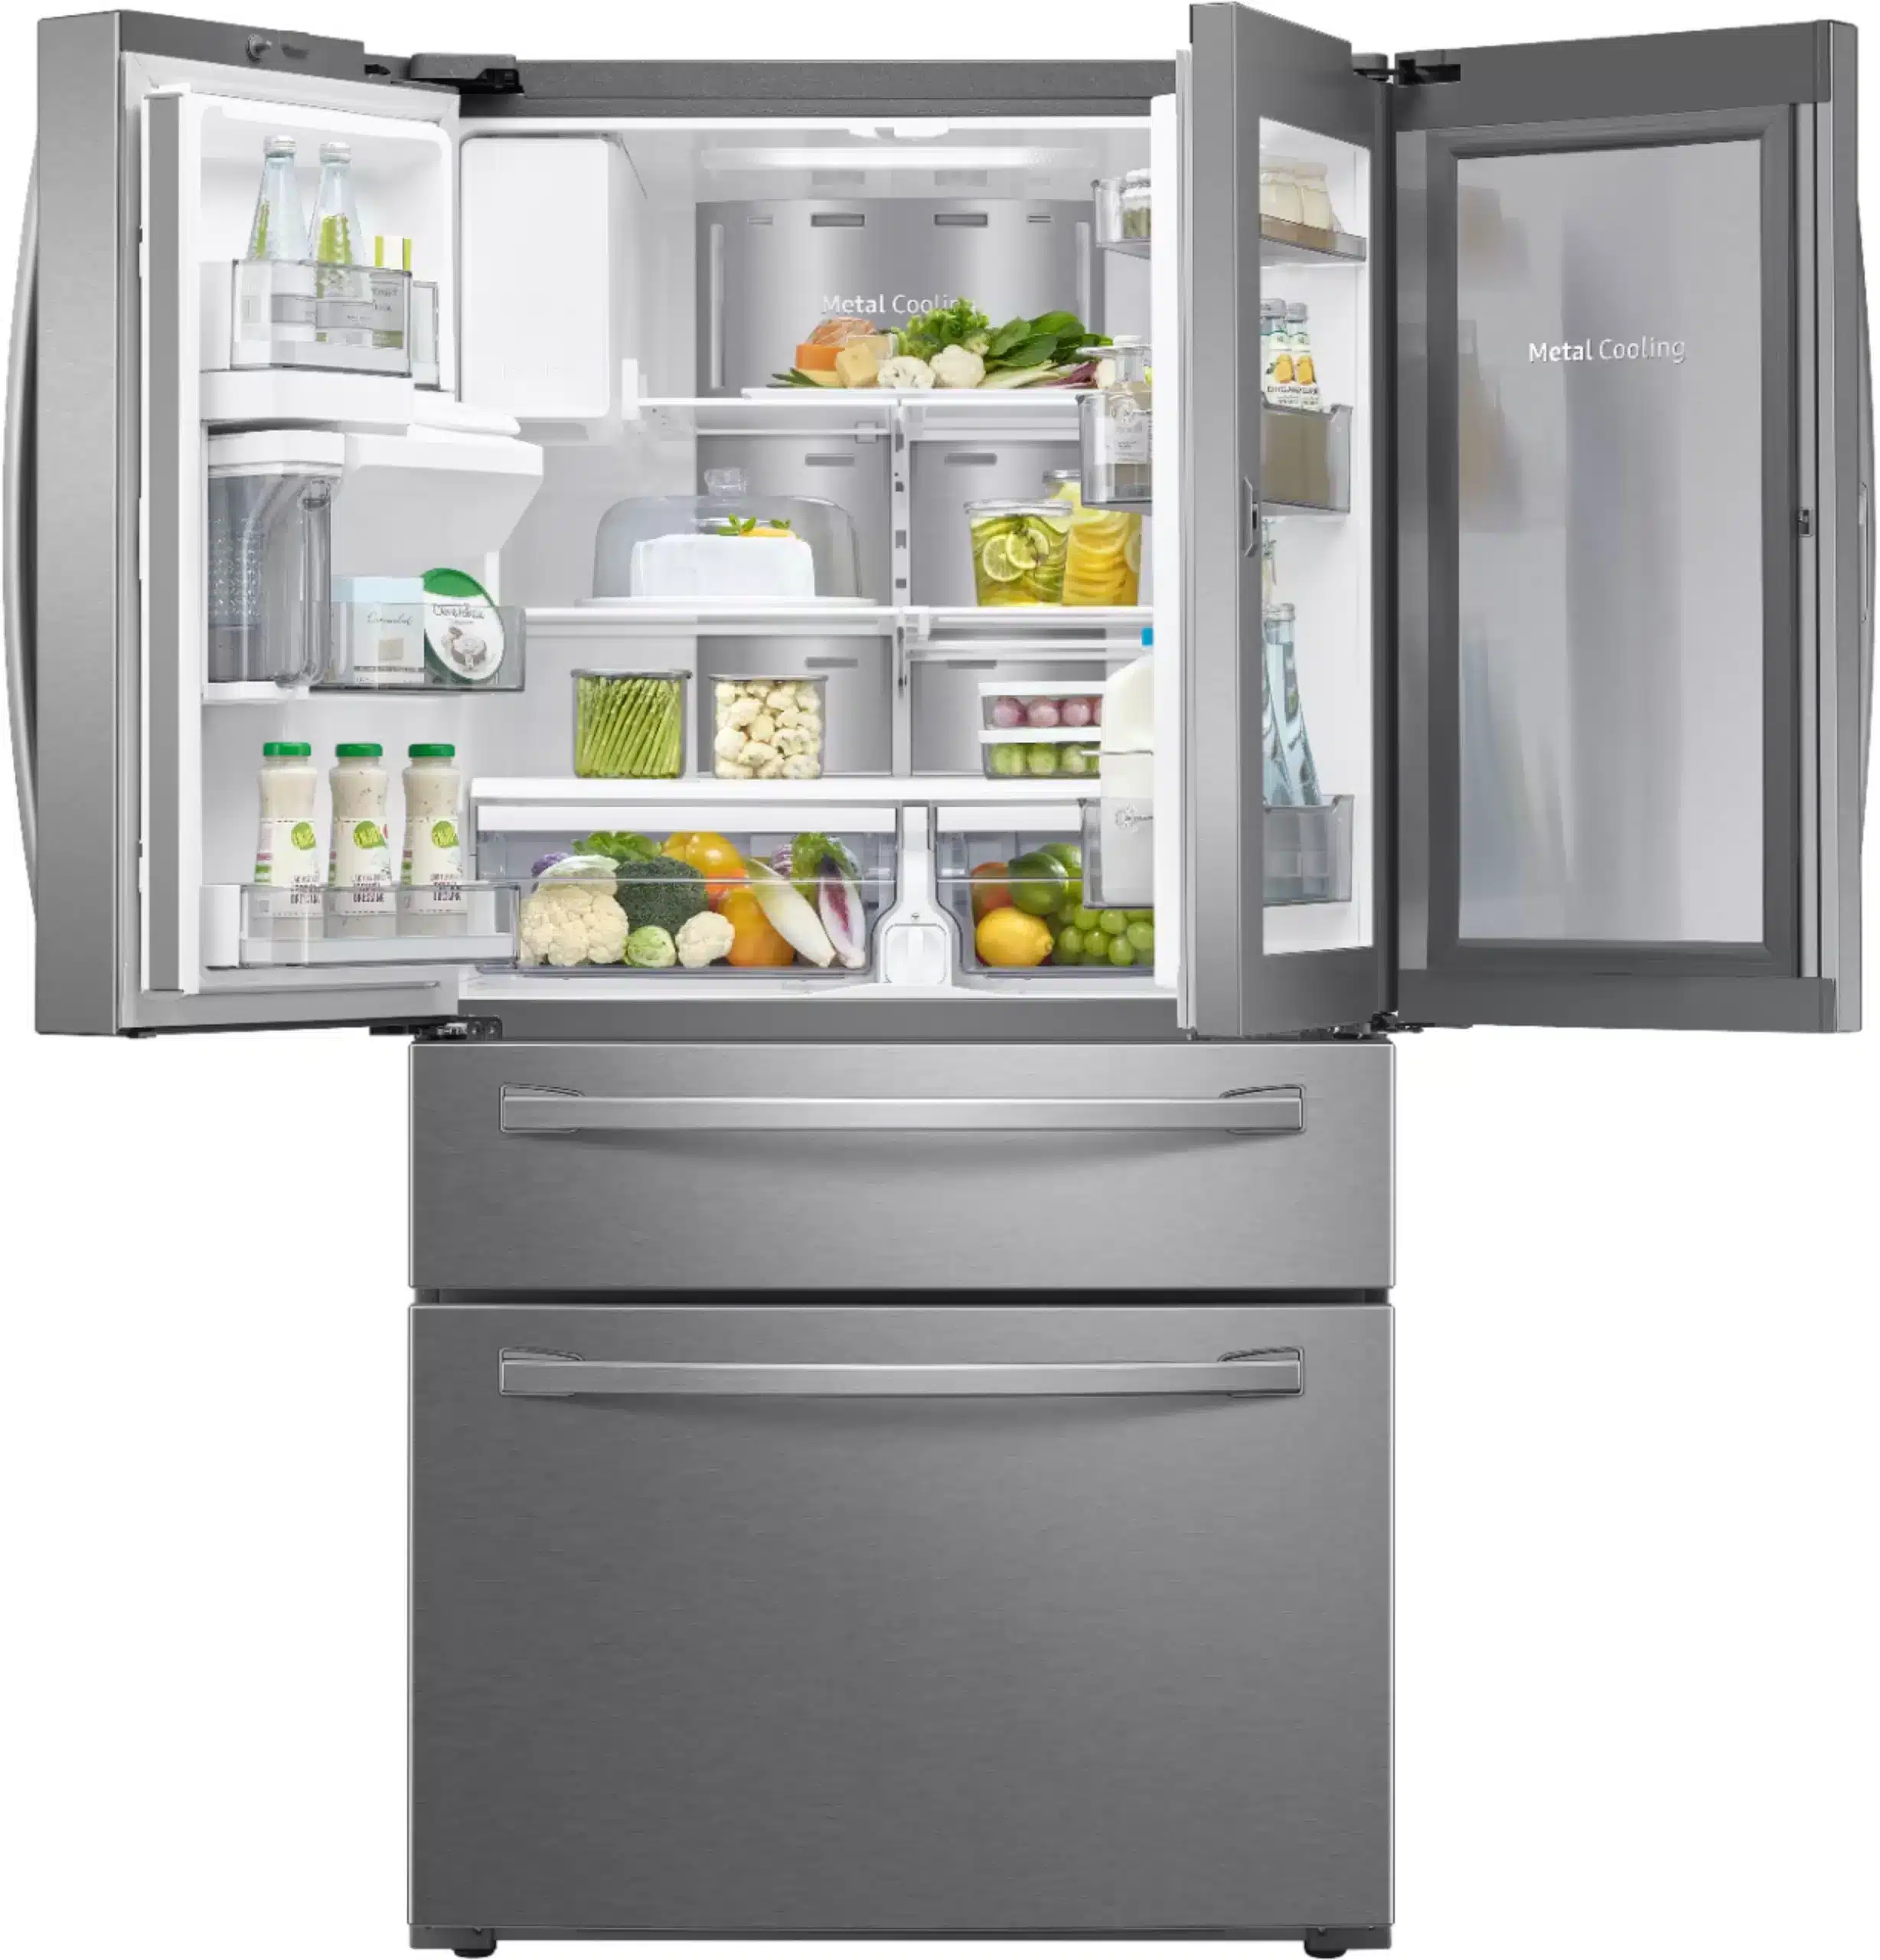 how-to-turn-off-ice-maker-on-samsung-fridge